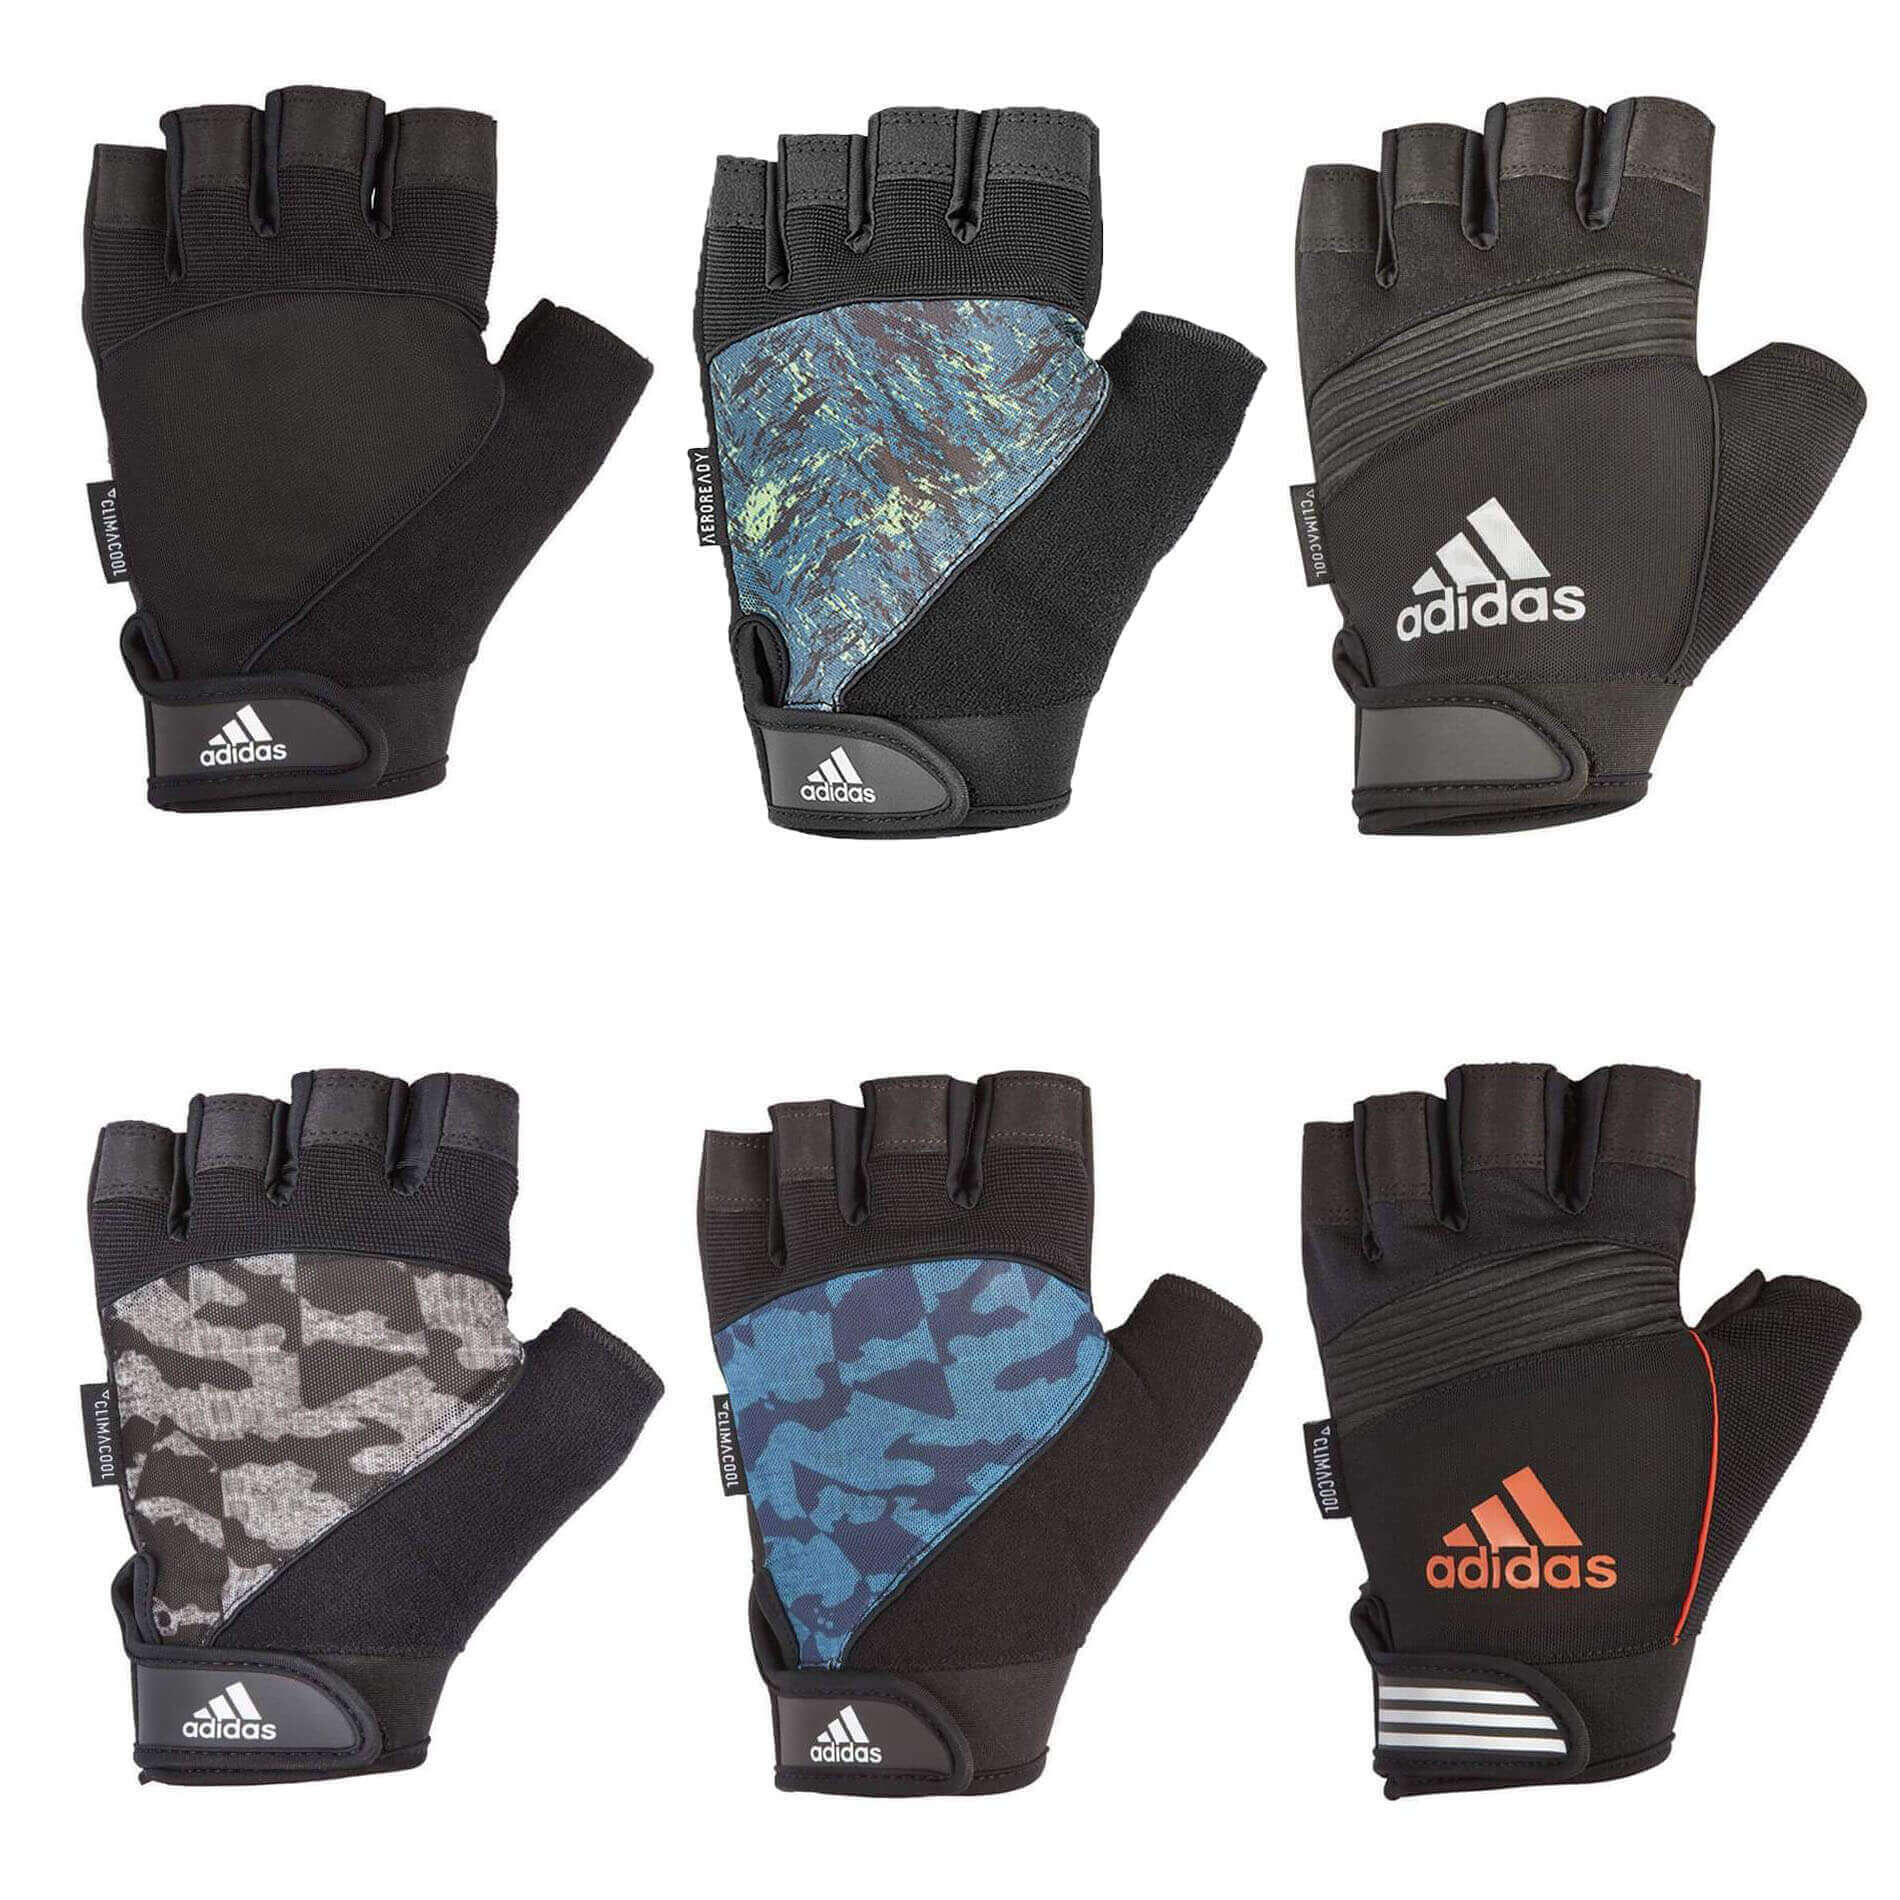 Adidas Half Finger Performance Training Gloves, Black/White 2/5